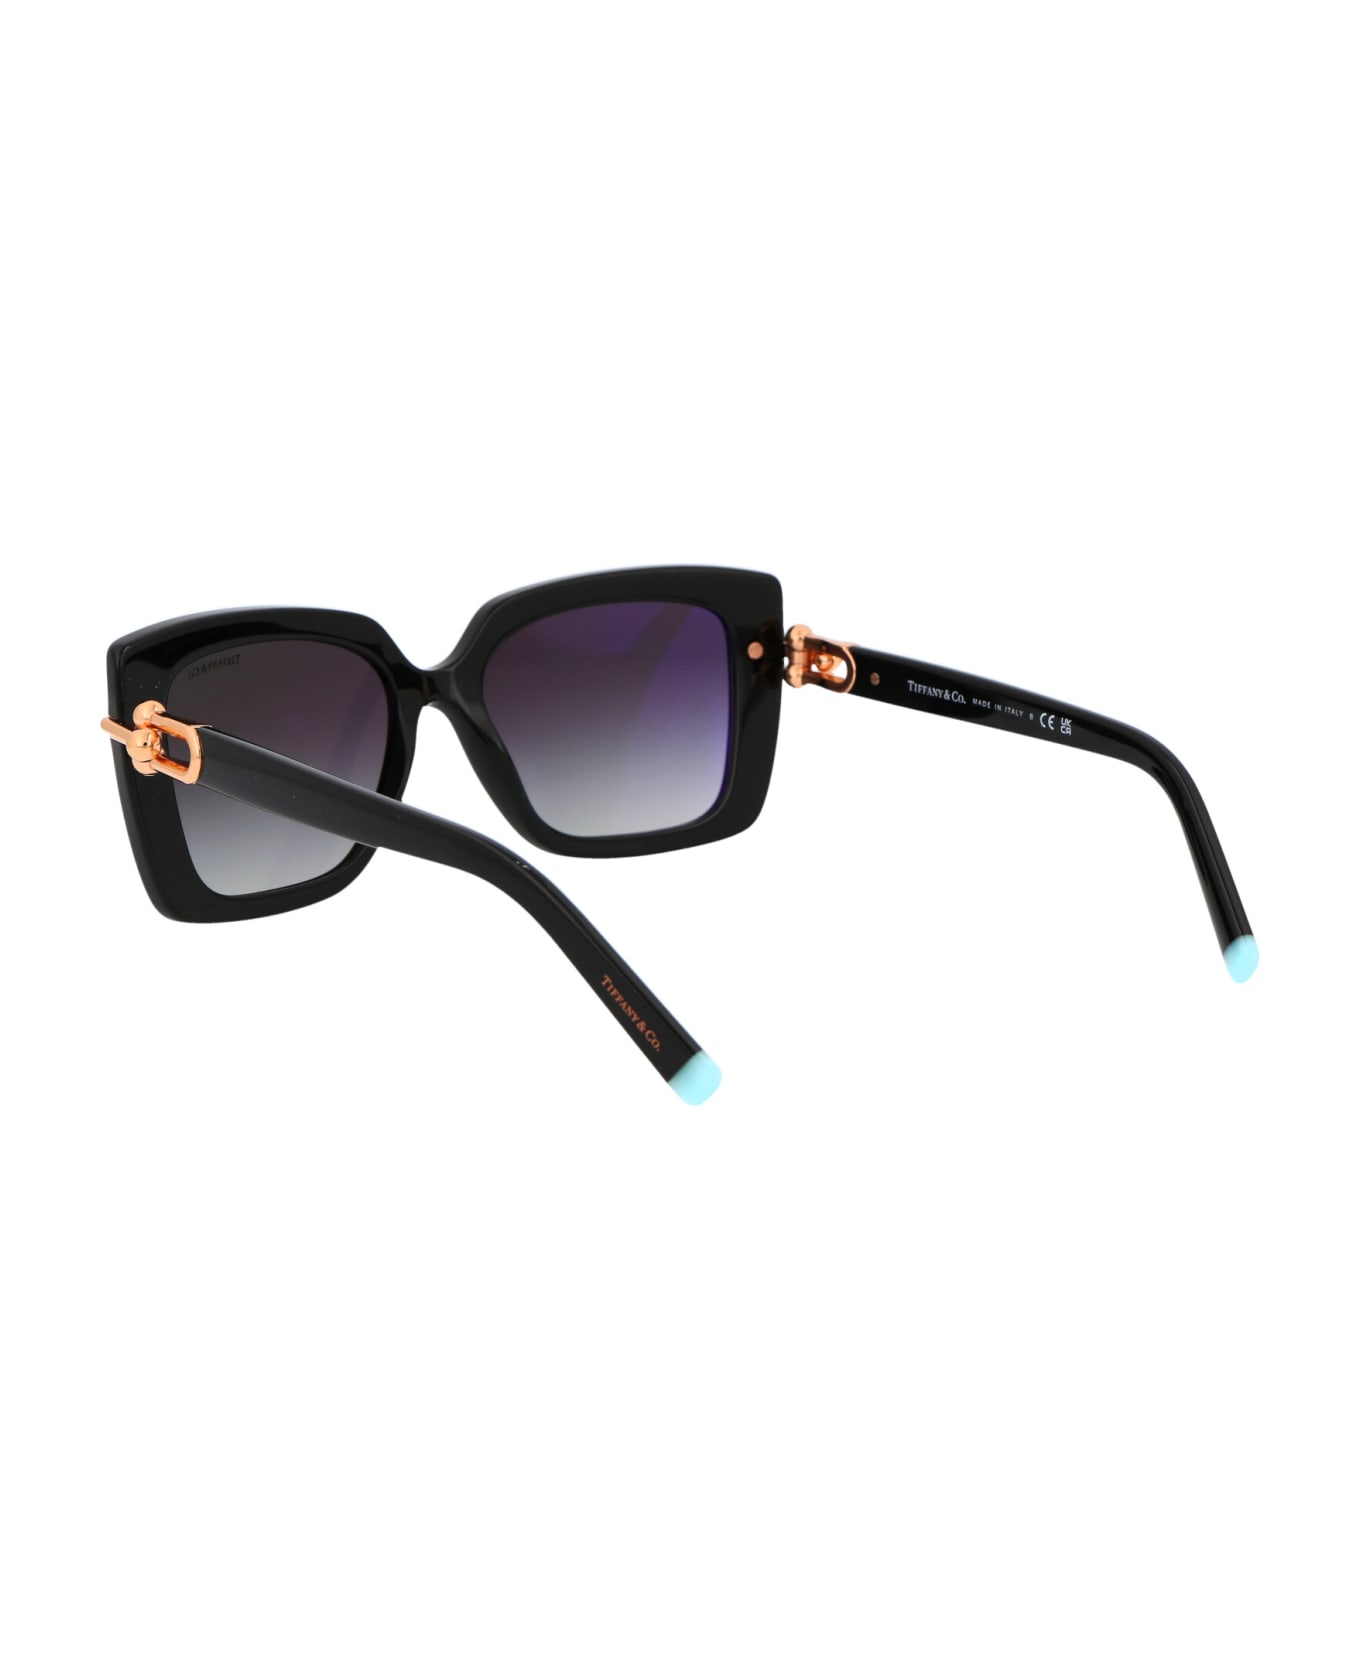 Tiffany & Co. 0tf4199 Sunglasses - 80013C Black サングラス